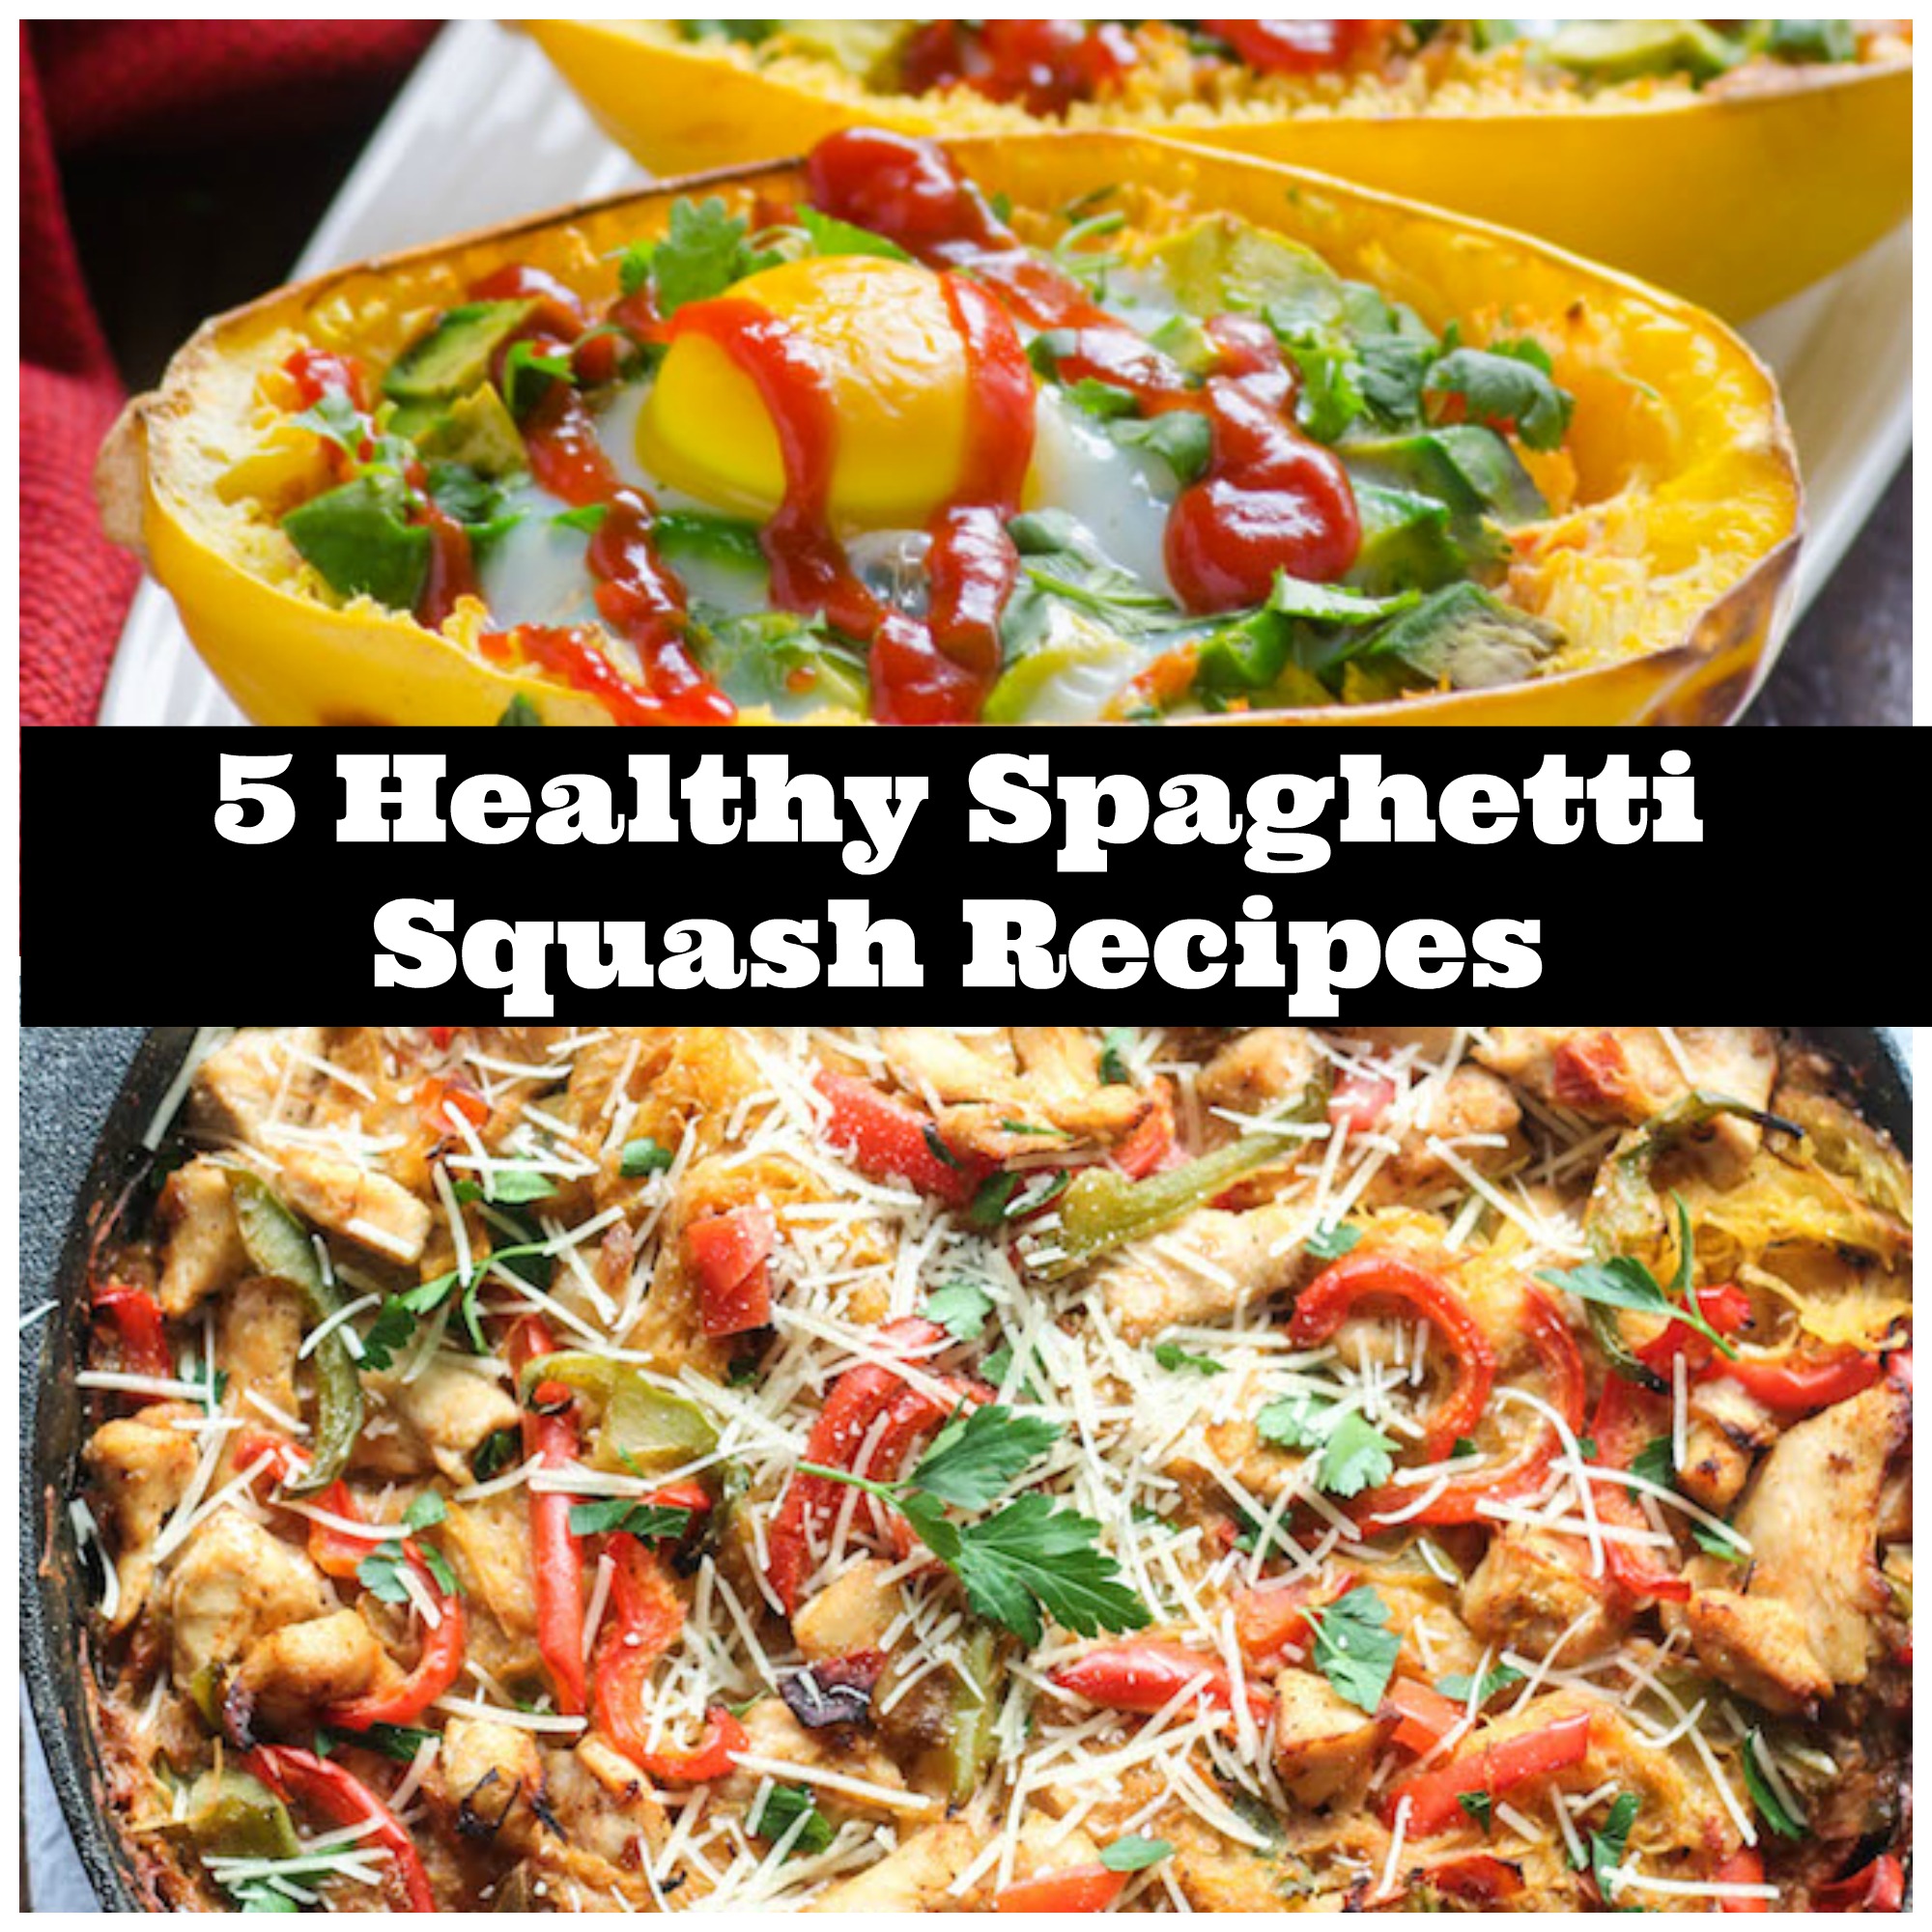 5 Healthy Spaghetti Squash Recipes to Try